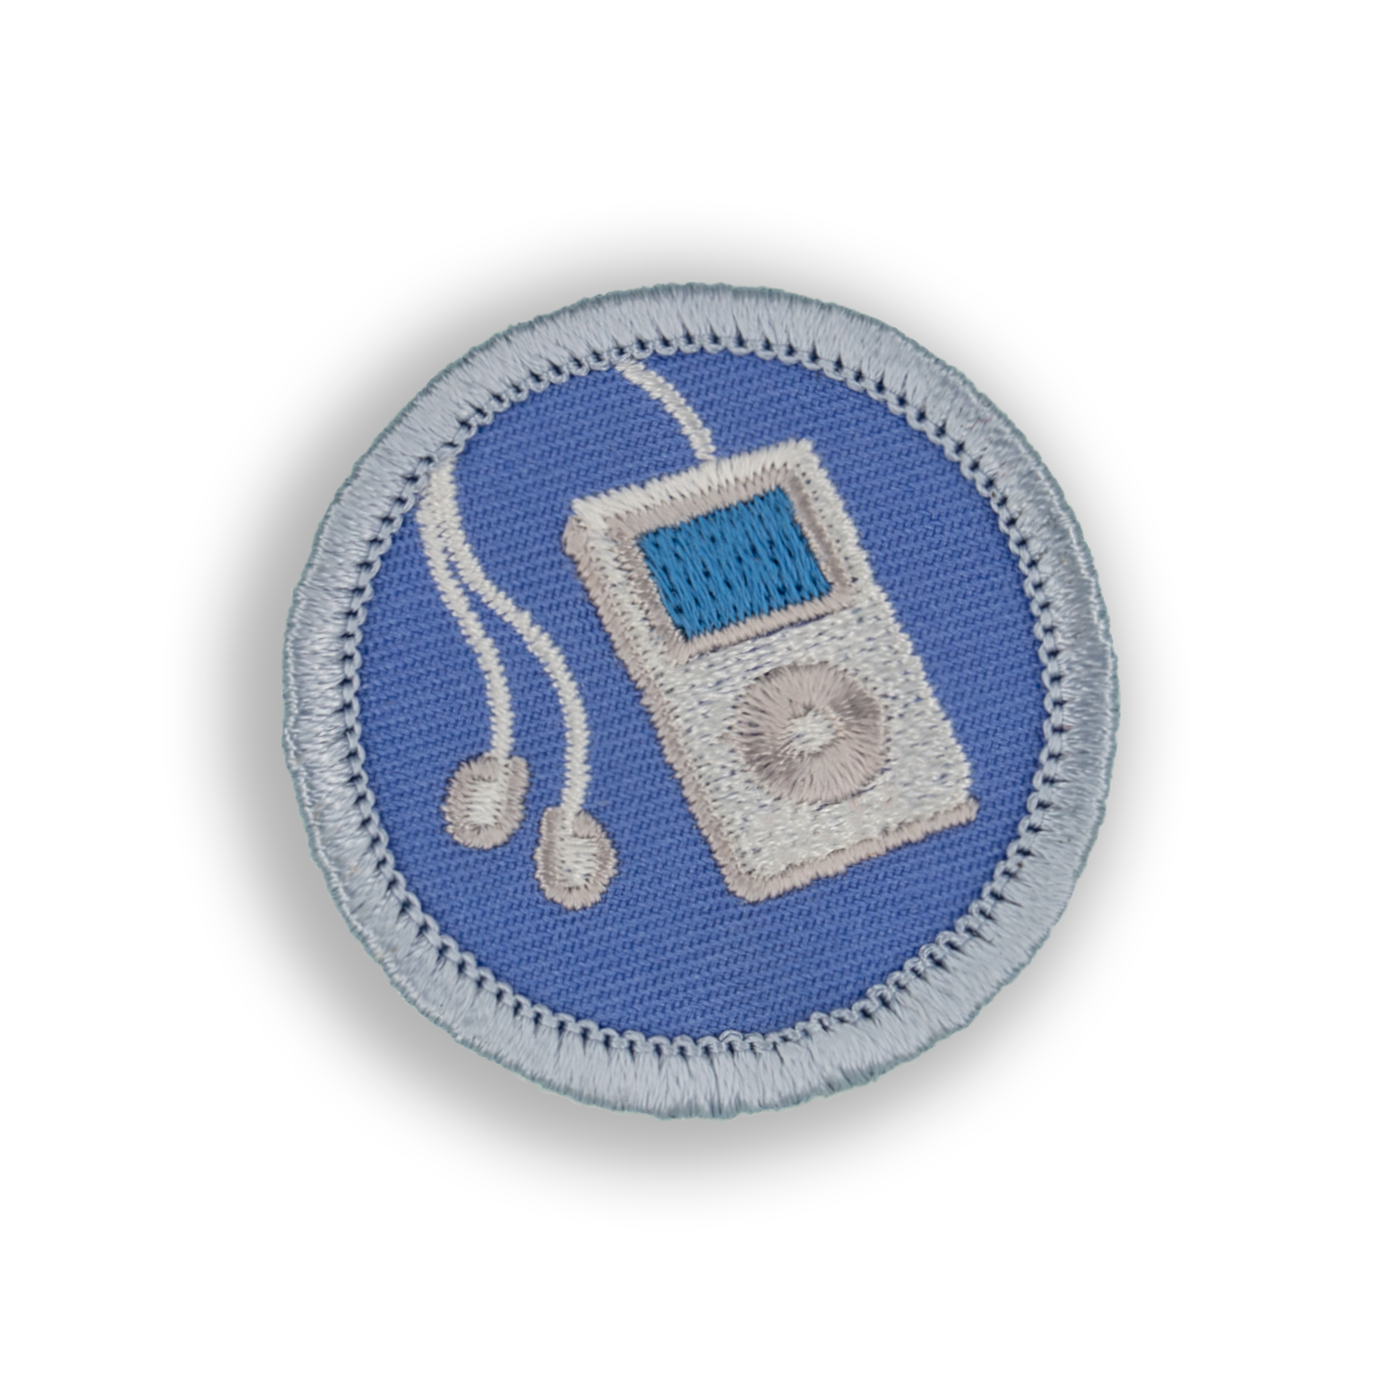 Mobile Tunes Patch | Demerit Wear - Fake Merit Badges